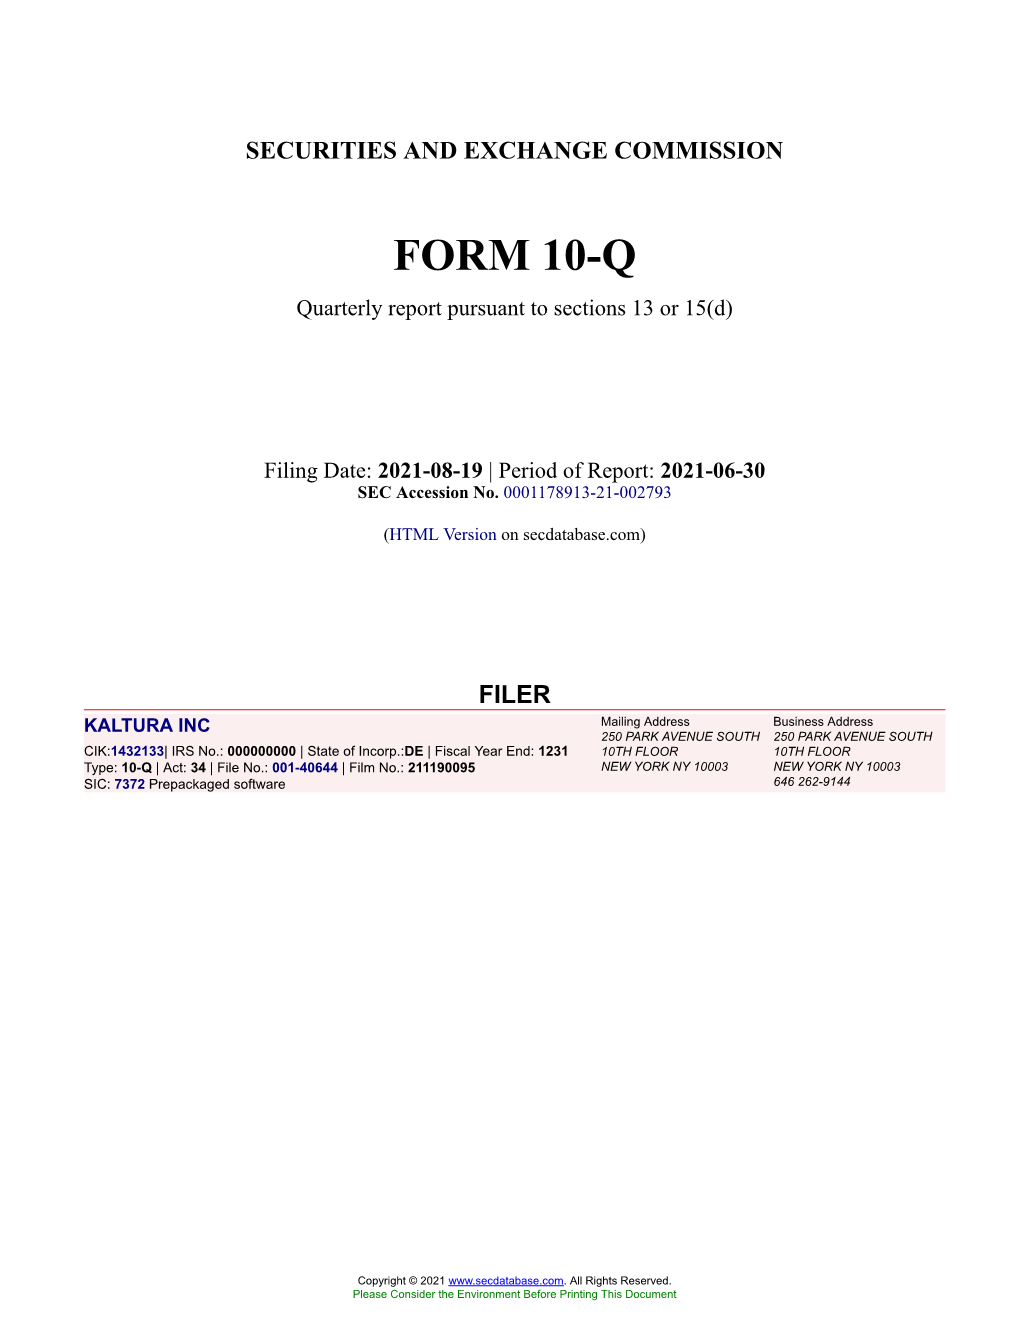 KALTURA INC Form 10-Q Quarterly Report Filed 2021-08-19